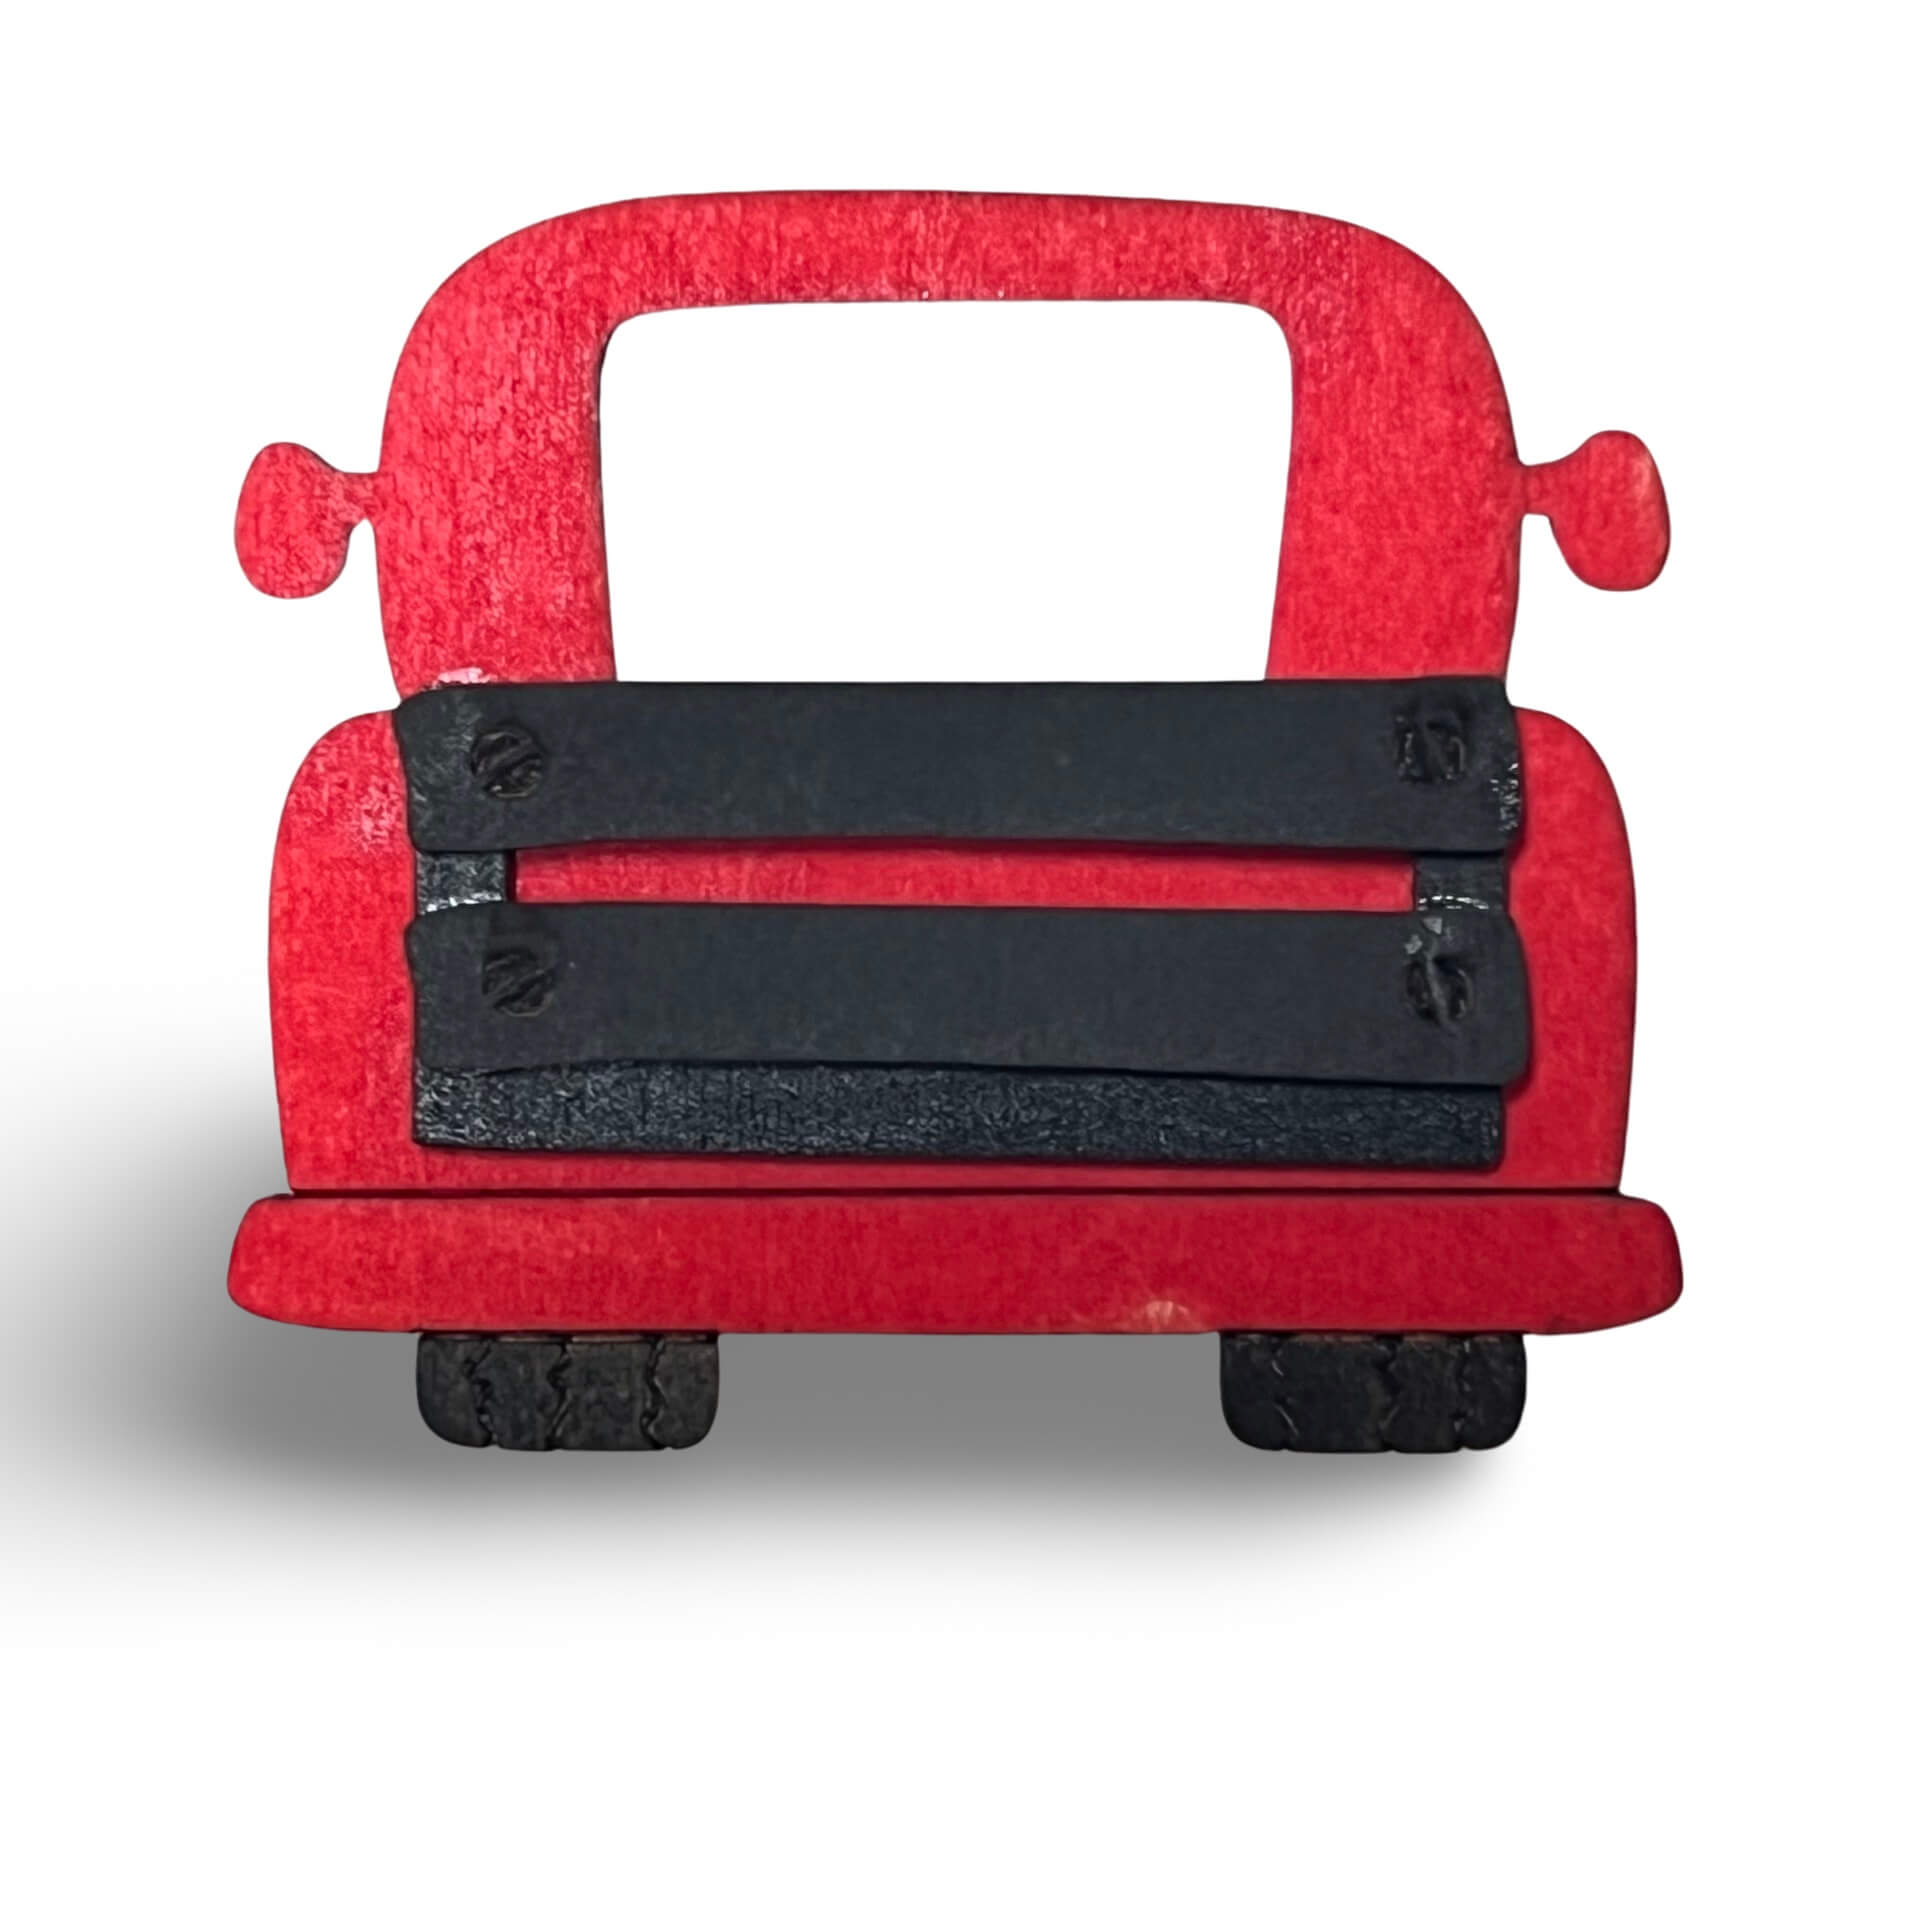 Little Red Truck Magnet